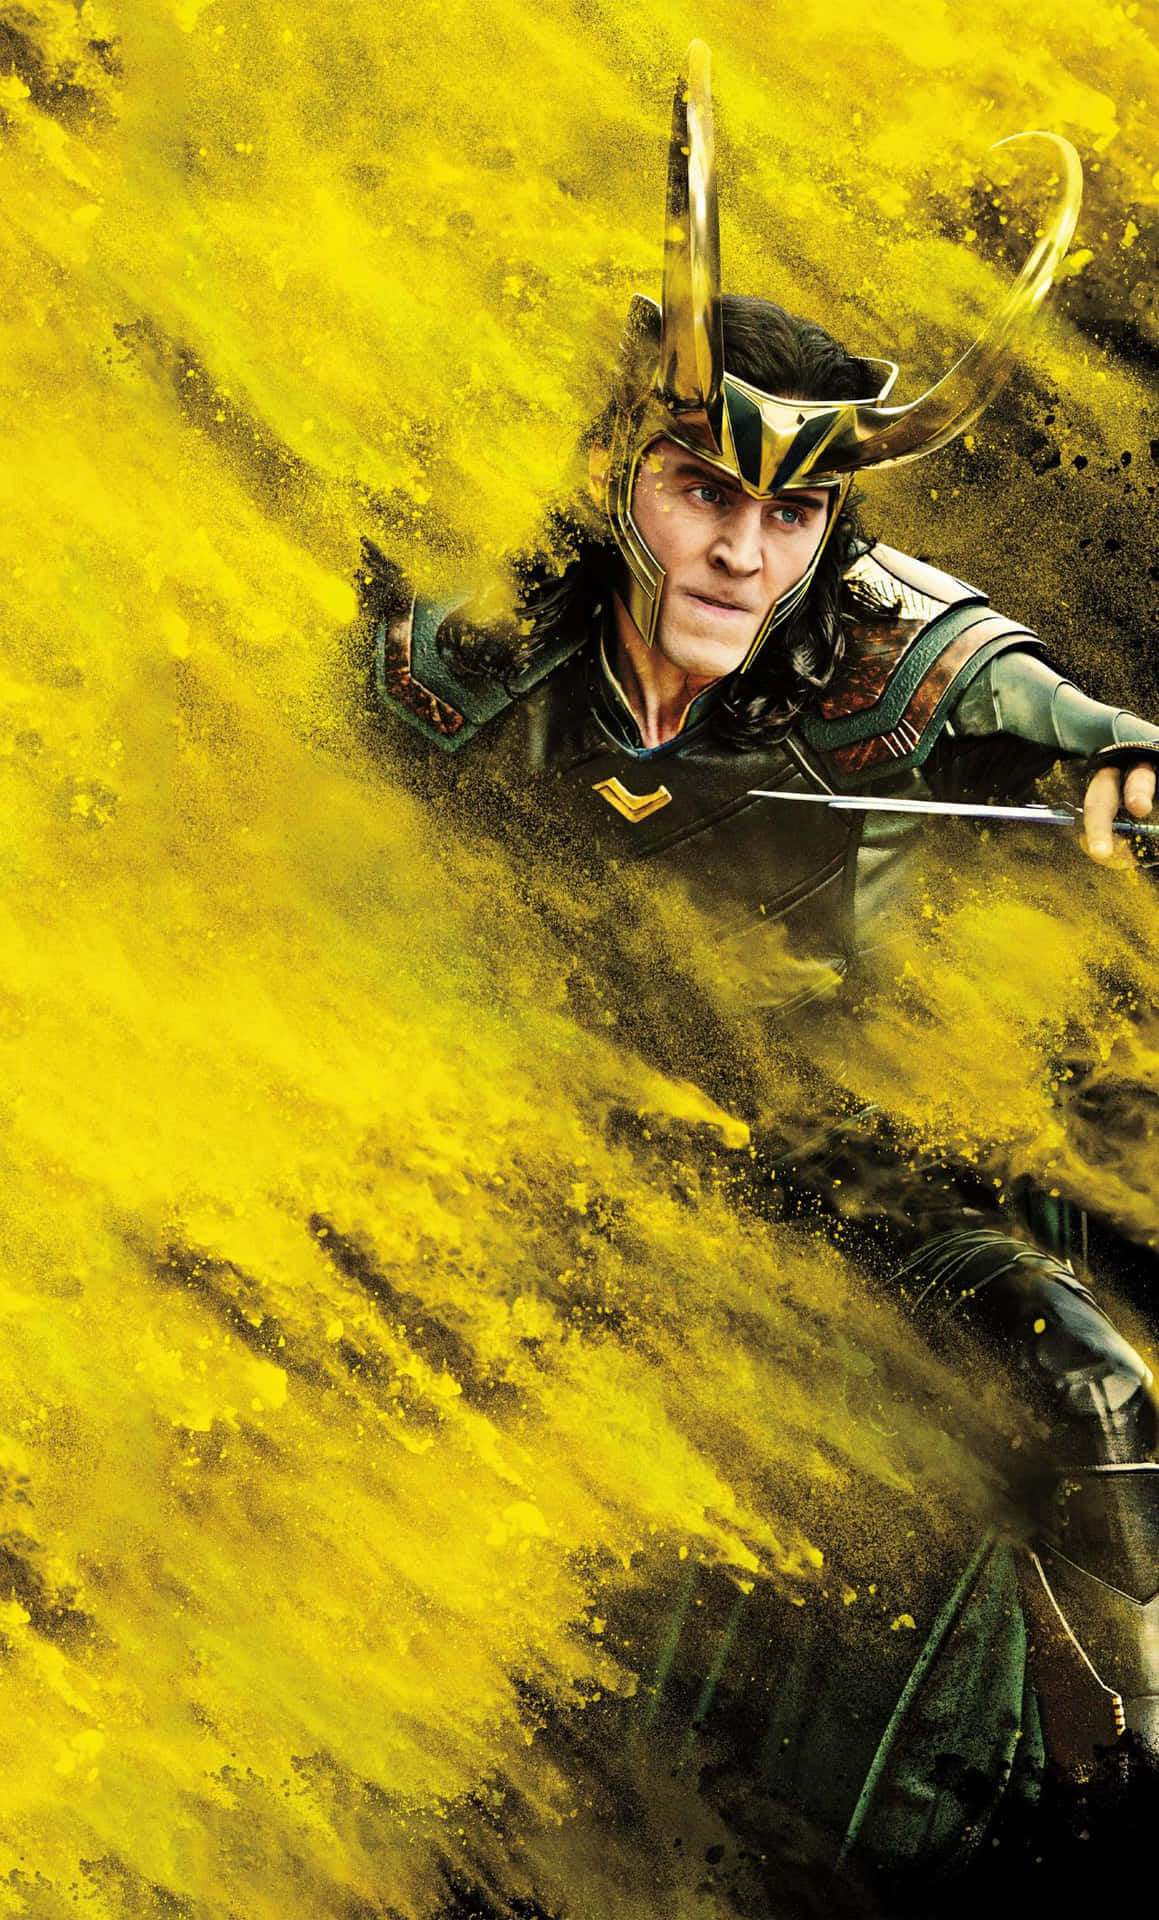 The God of Mischief, Loki